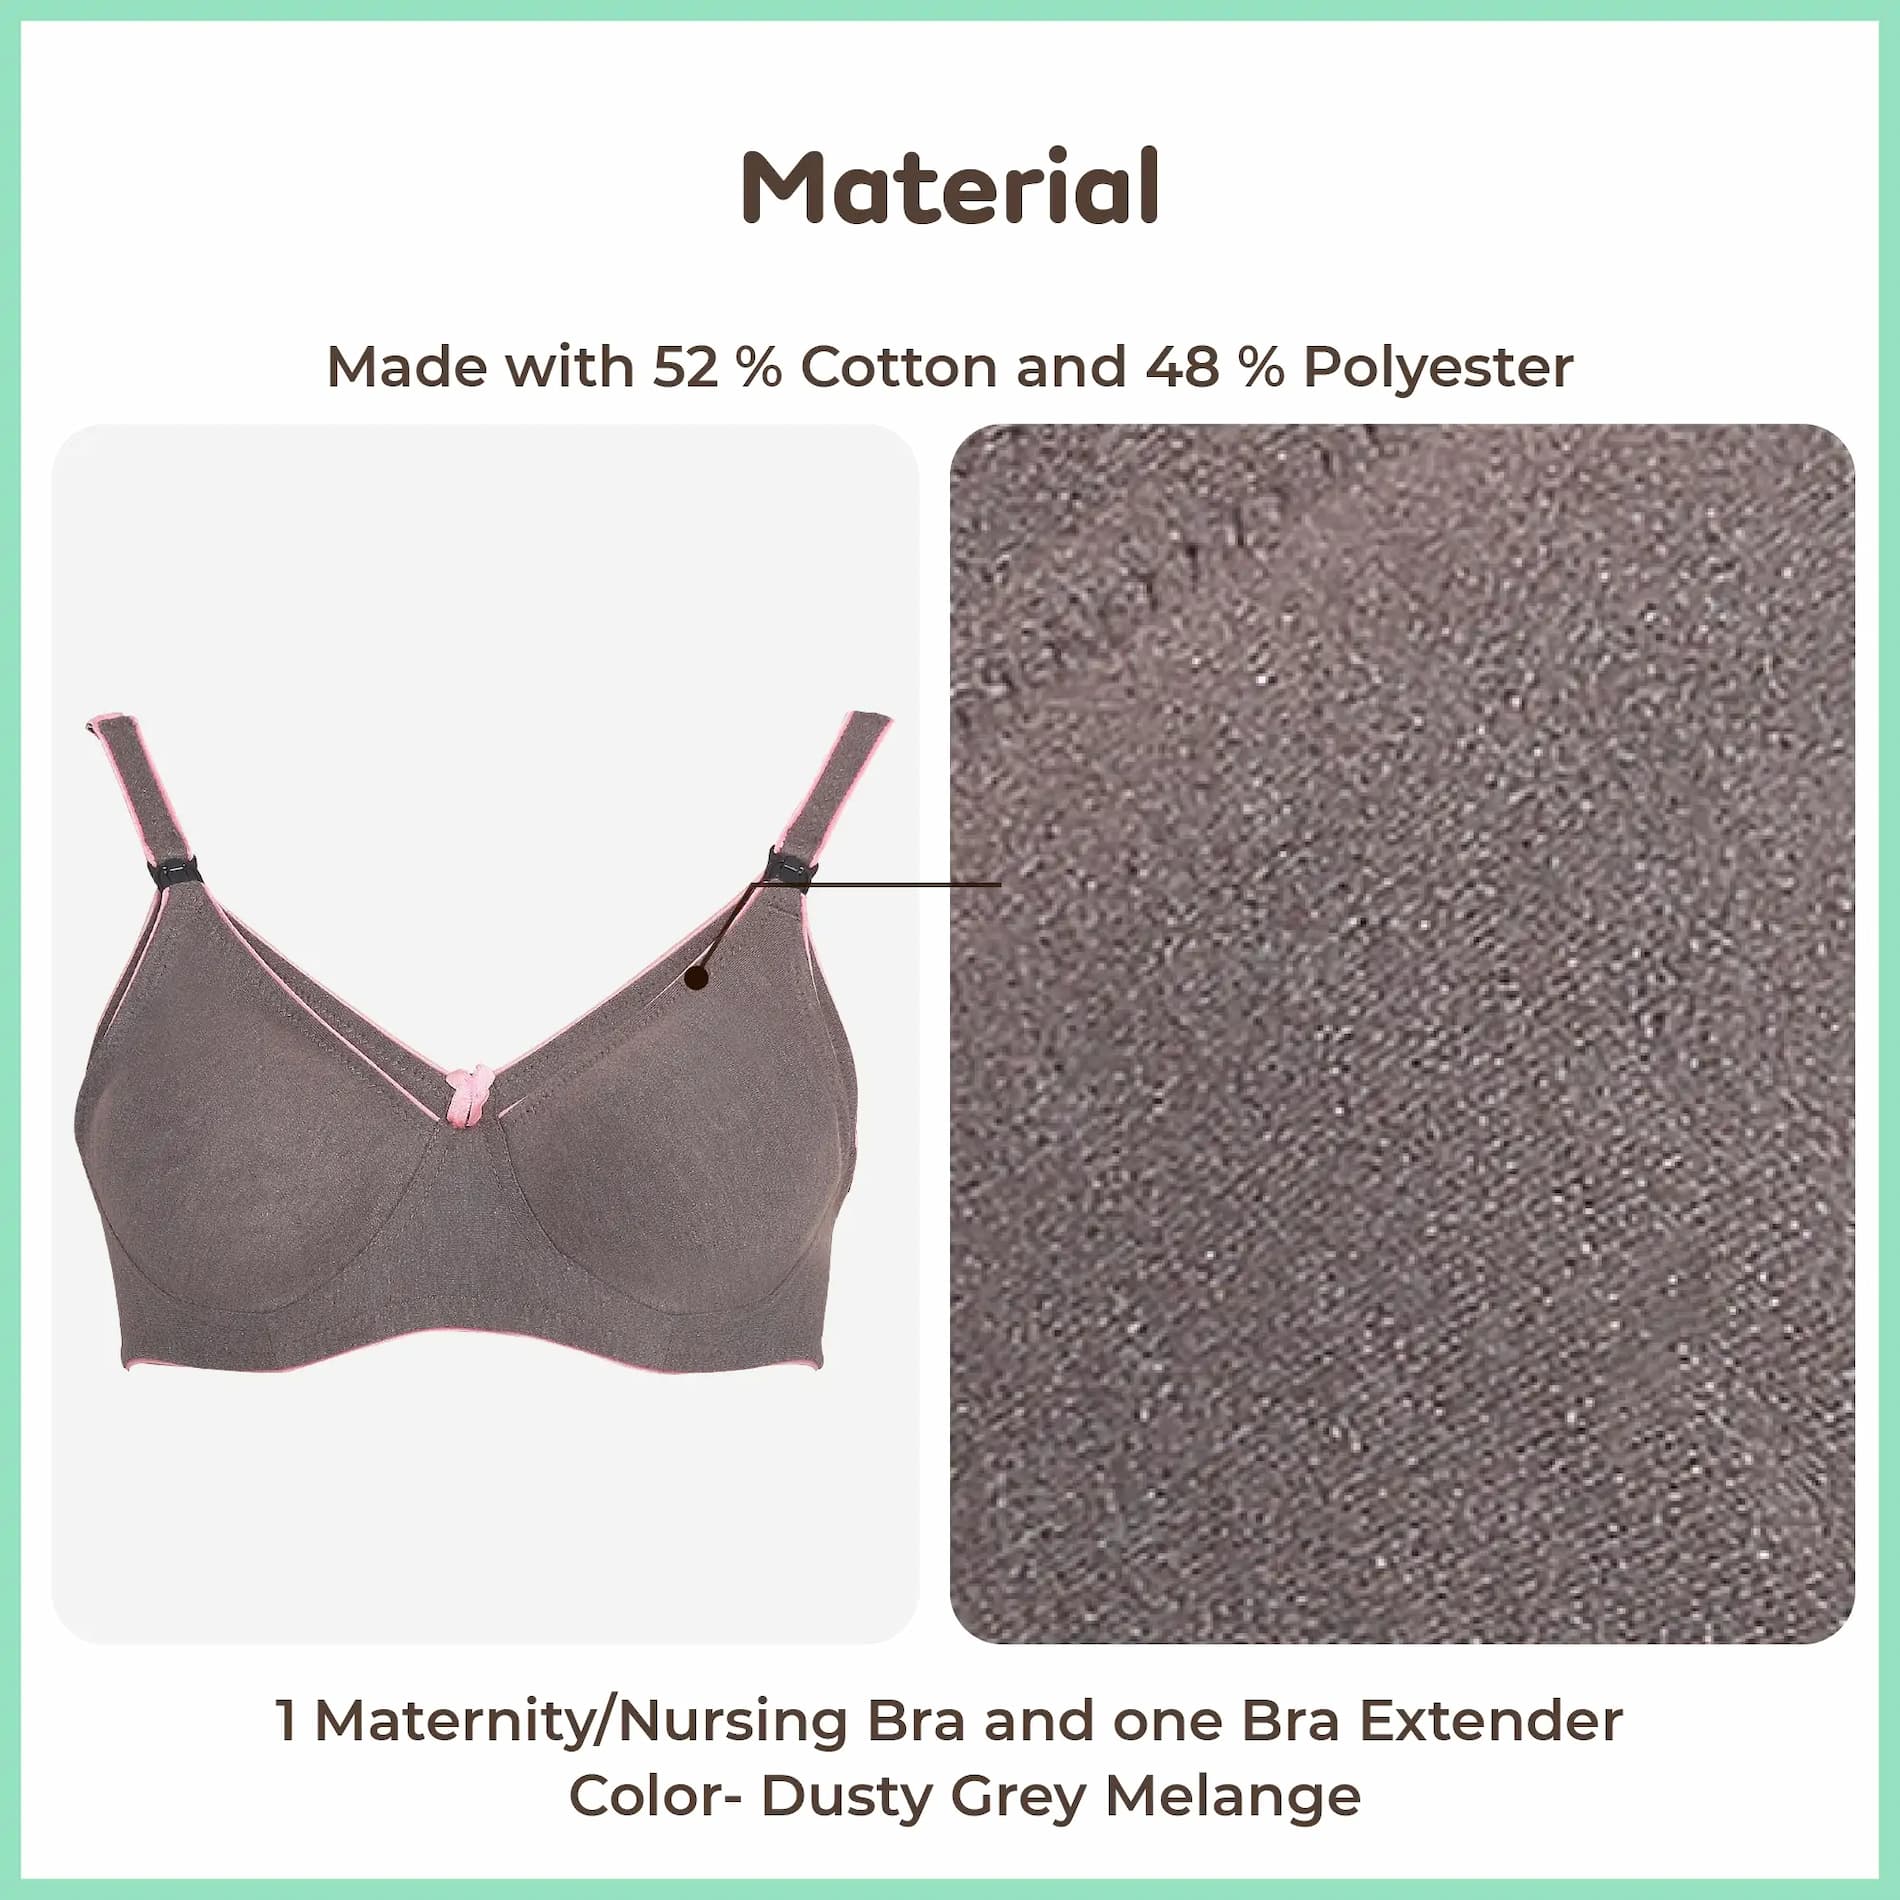 Mylo Maternity/Nursing Moulded Cup Extra Comfort Bra with free Bra Extender - Dusty Grey Melange 40B 